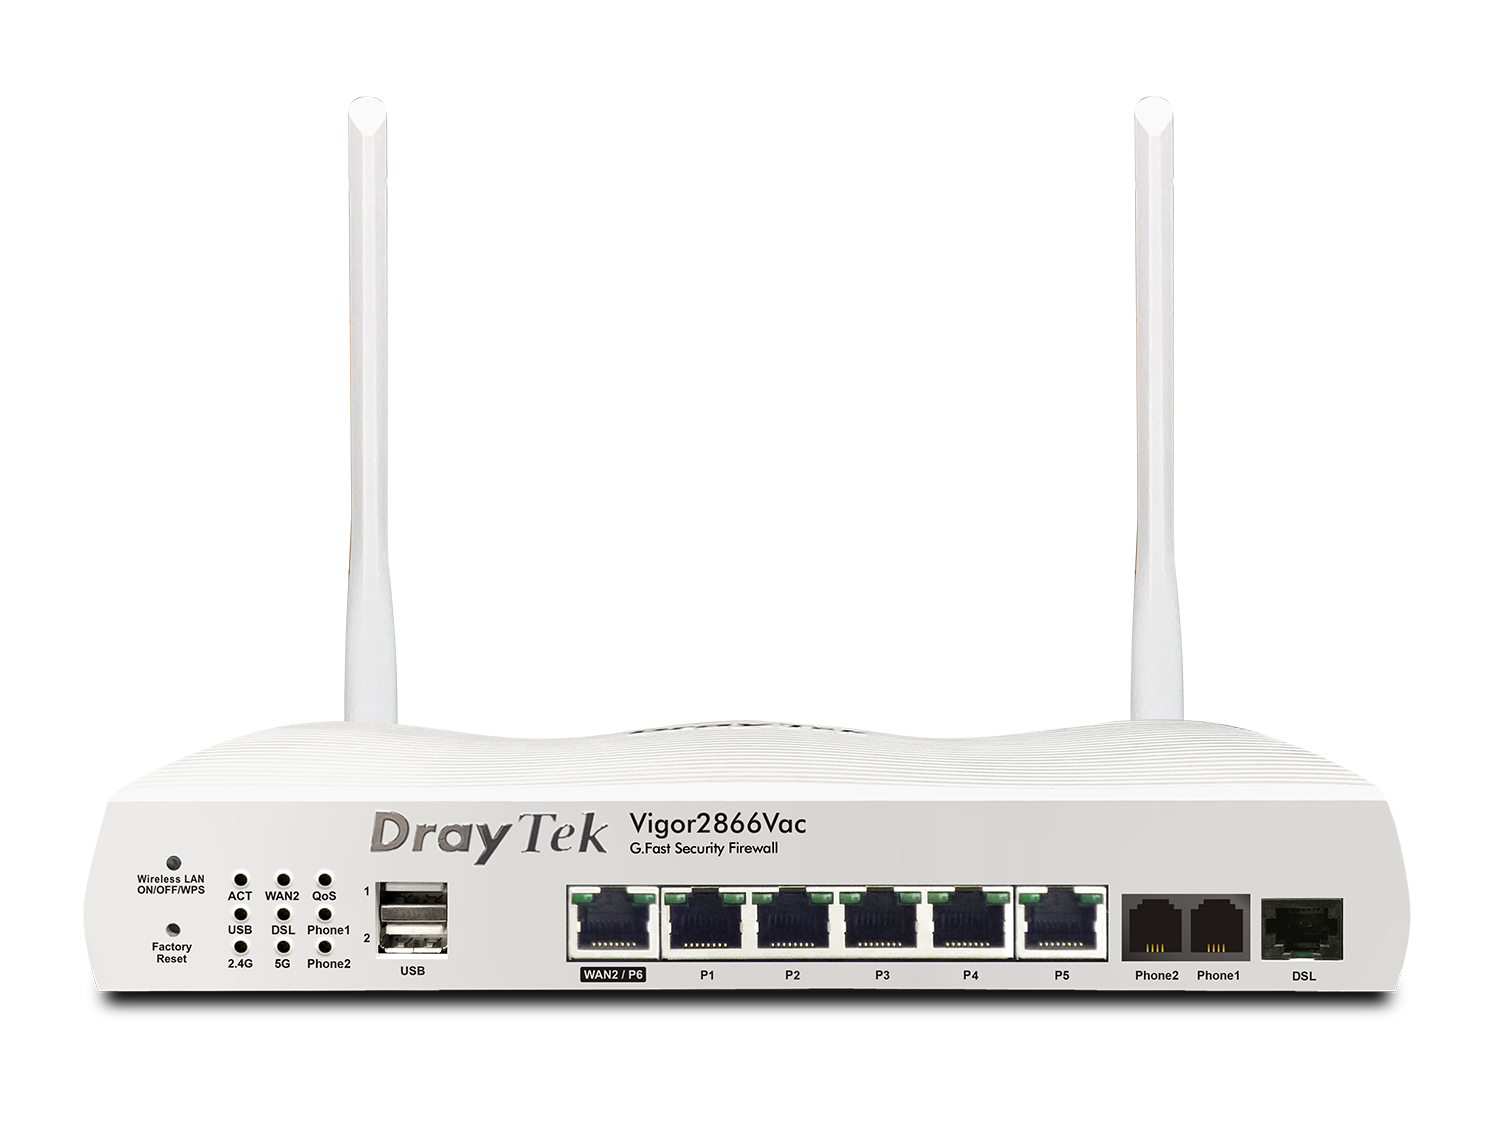 DrayTek Vigor 2866ax G.Fast Dual-WAN VPN Firewall Router